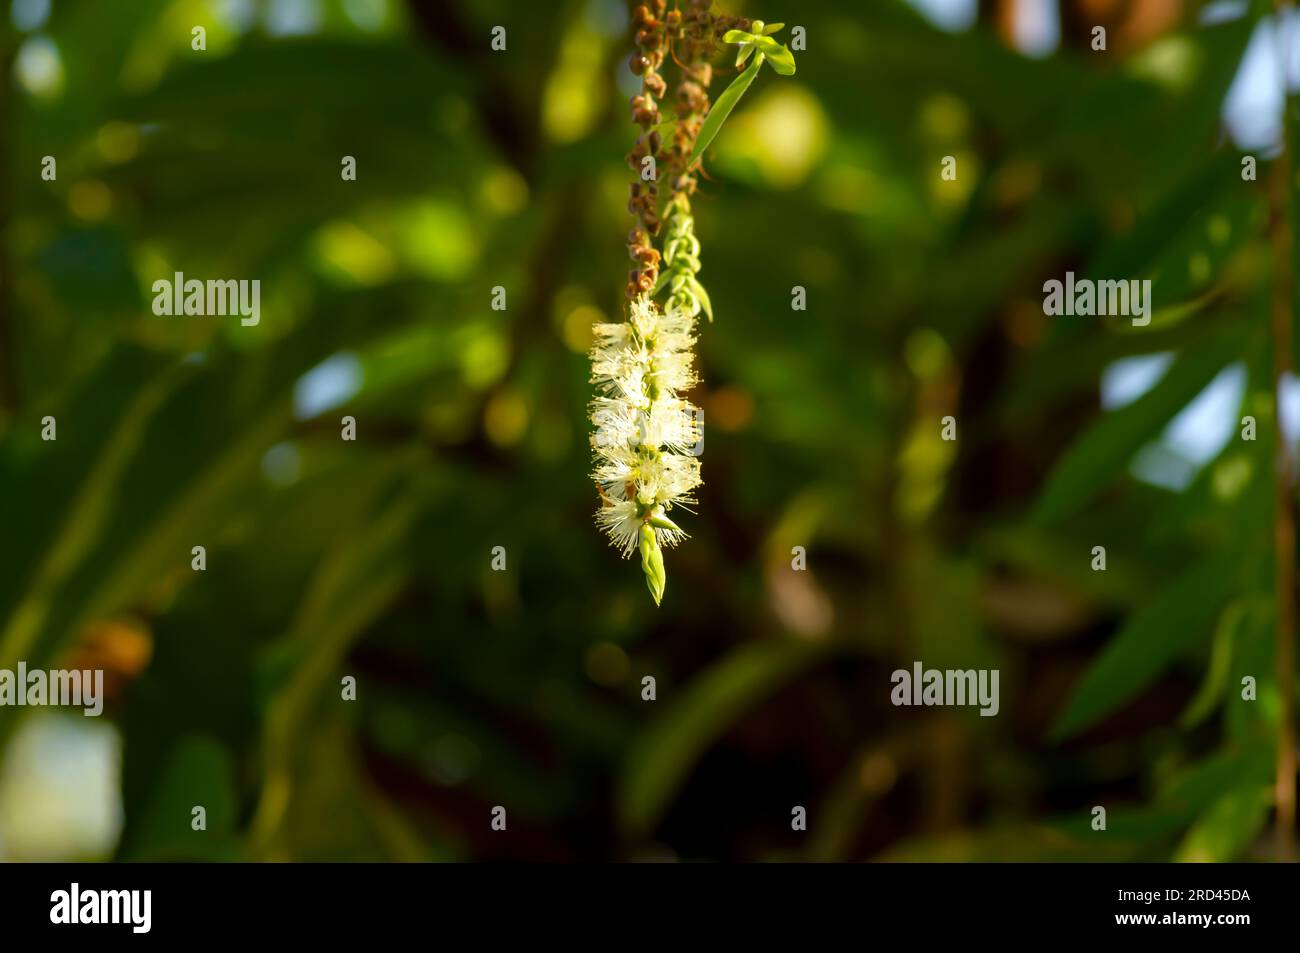 Melaleuca cajuputi flowers, Cjuput, in shallow focus, with blurred background. Stock Photo